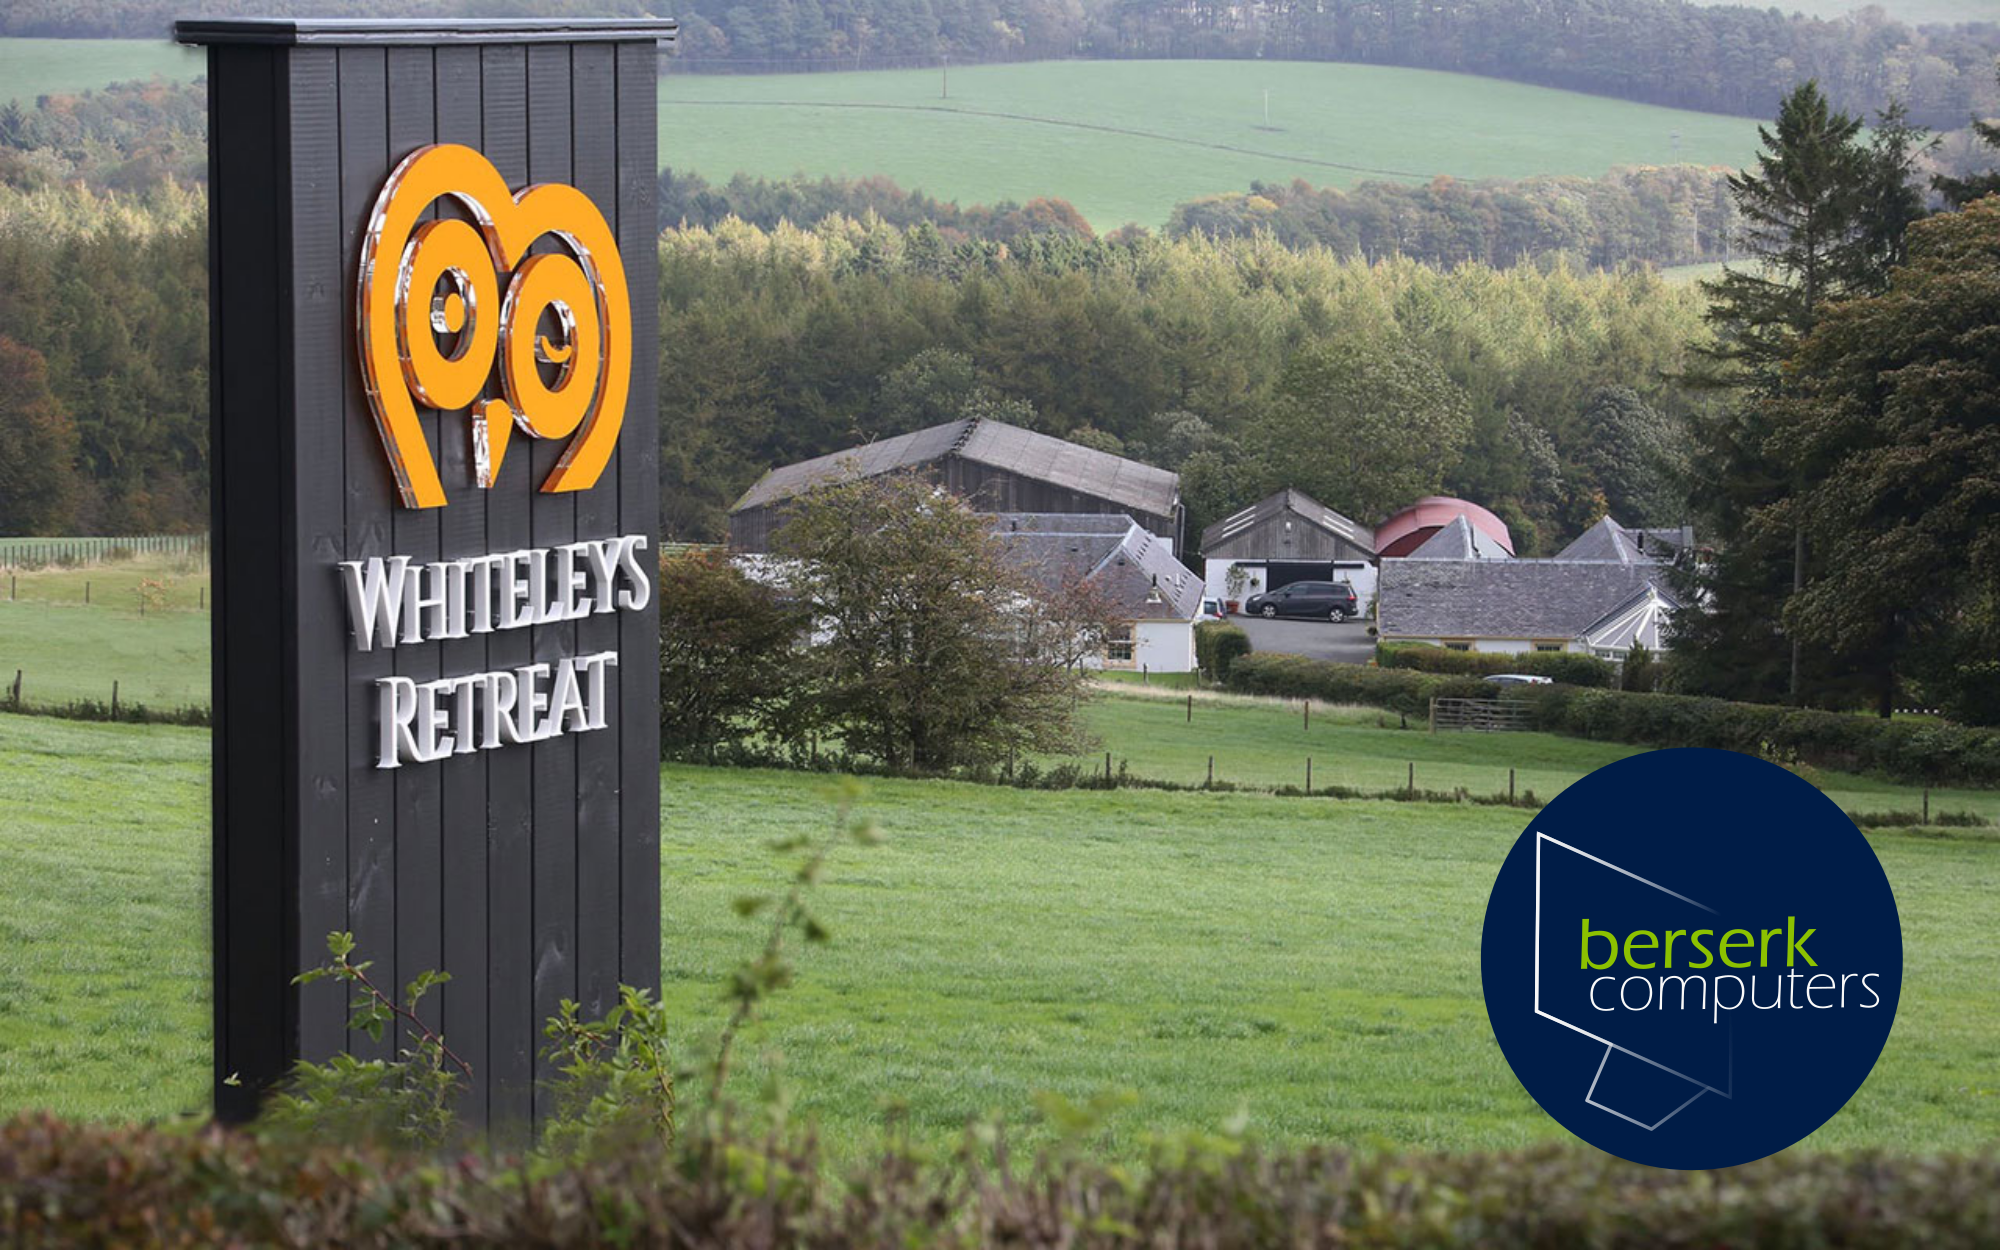 Berserk Computers Ltd supports Whiteleys Retreat as a Corporate Partner